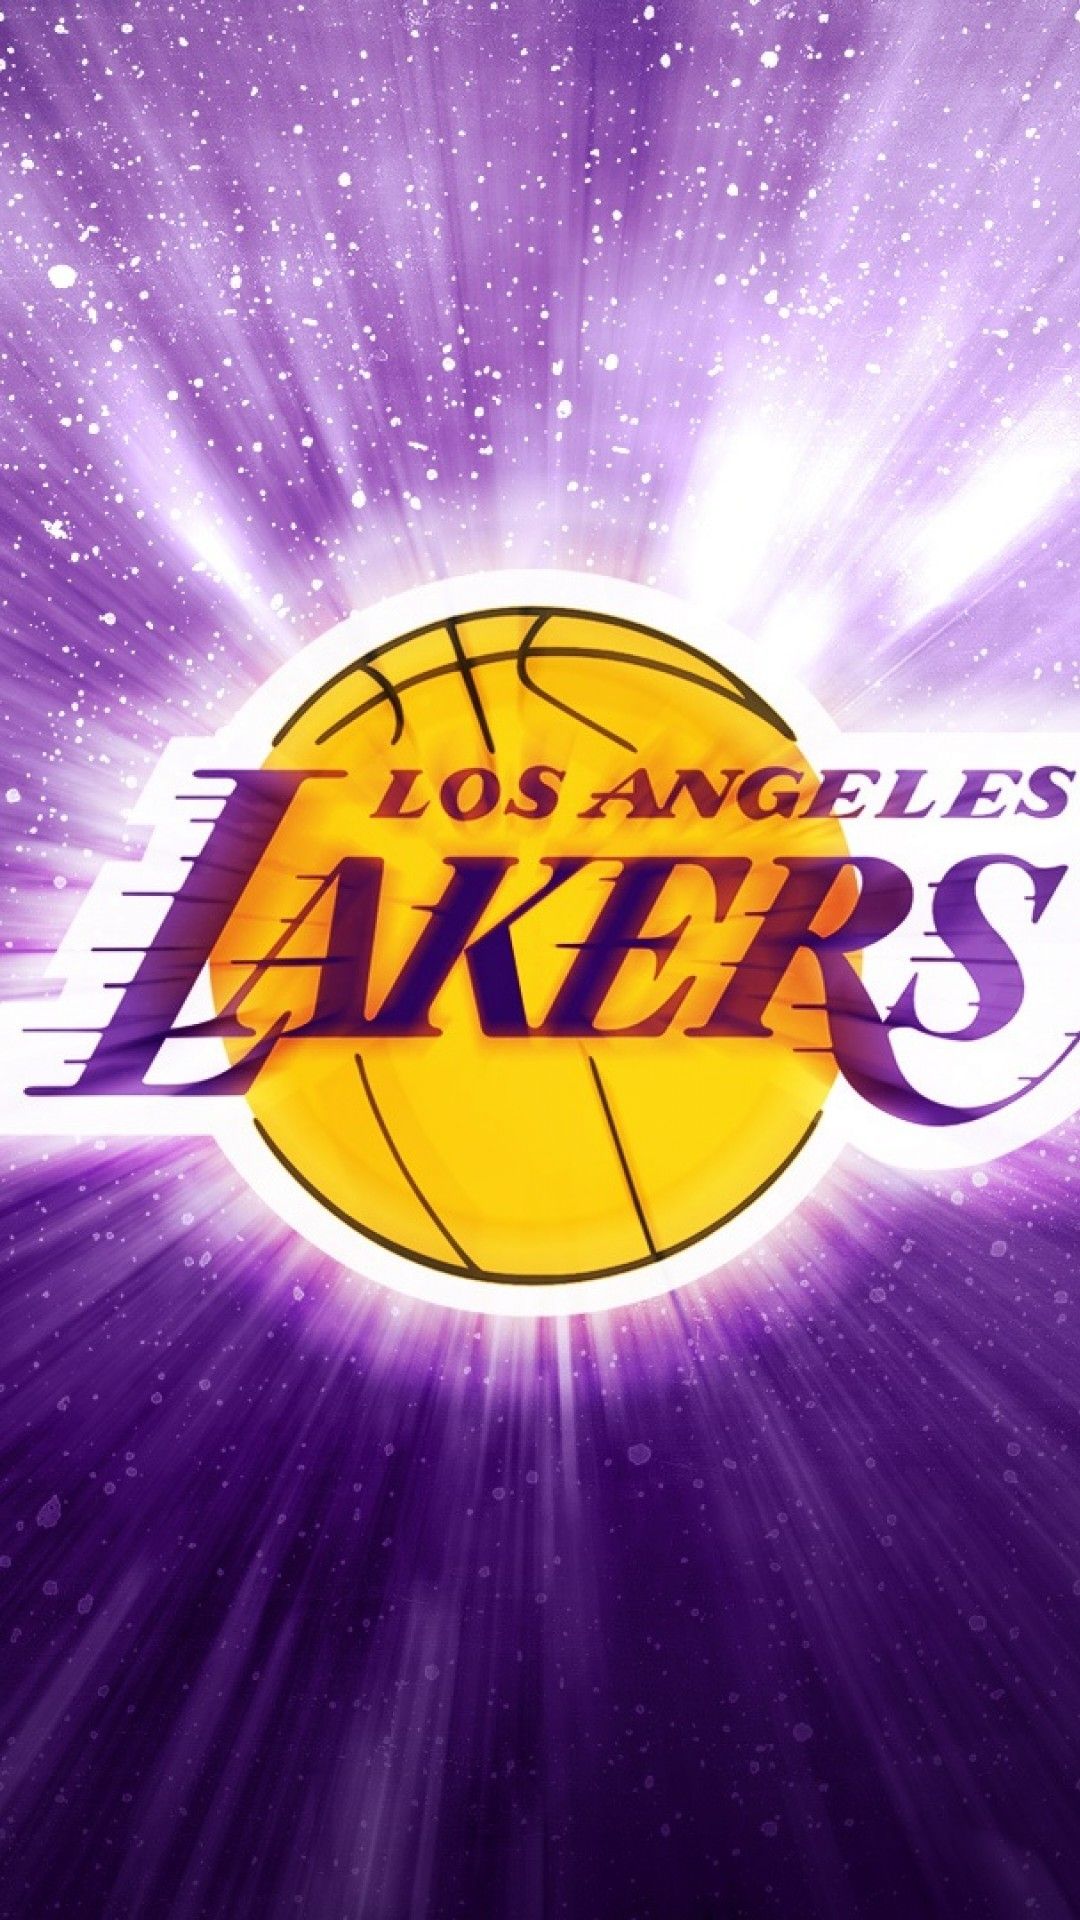 Free download Lakers Wallpaper - [1080x1920] for your Desktop, Mobile & Tablet. Explore Lakers 2020 Wallpaper. Lakers 2020 Wallpaper, Wallpaper Lakers, Lakers Wallpaper